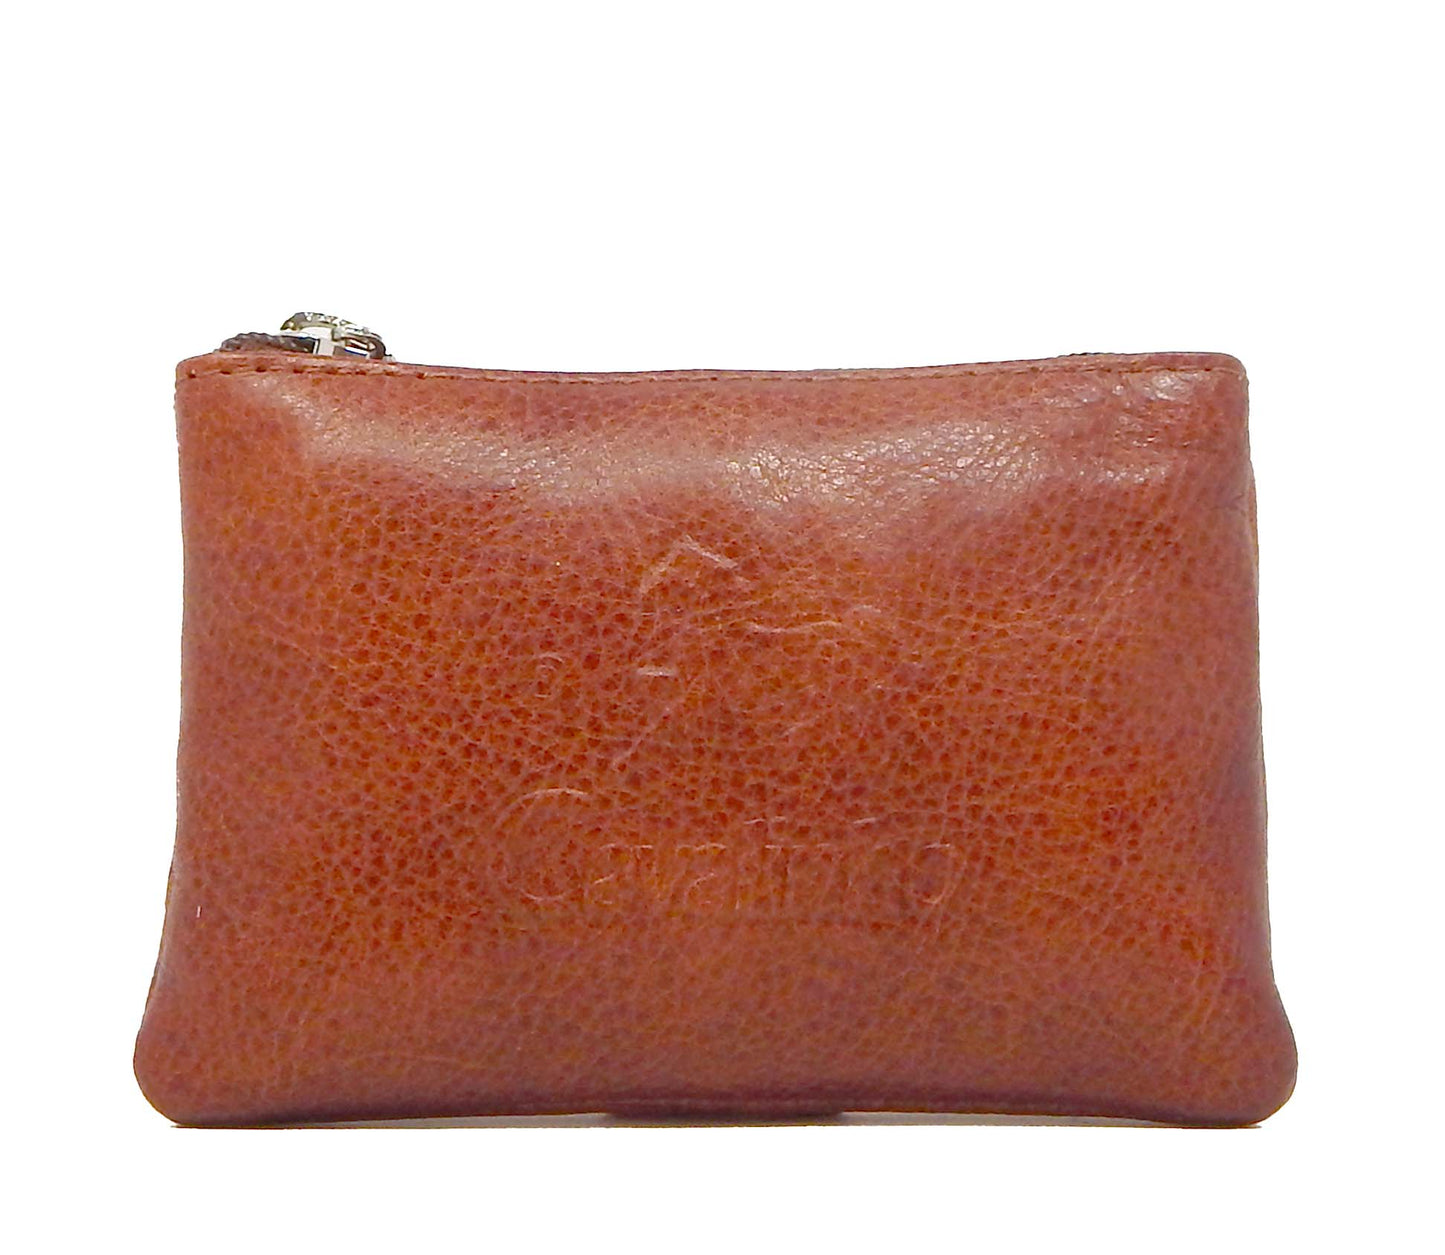 Cavalinho Leather Change Purse - SaddleBrown - 28610547.13.99_1